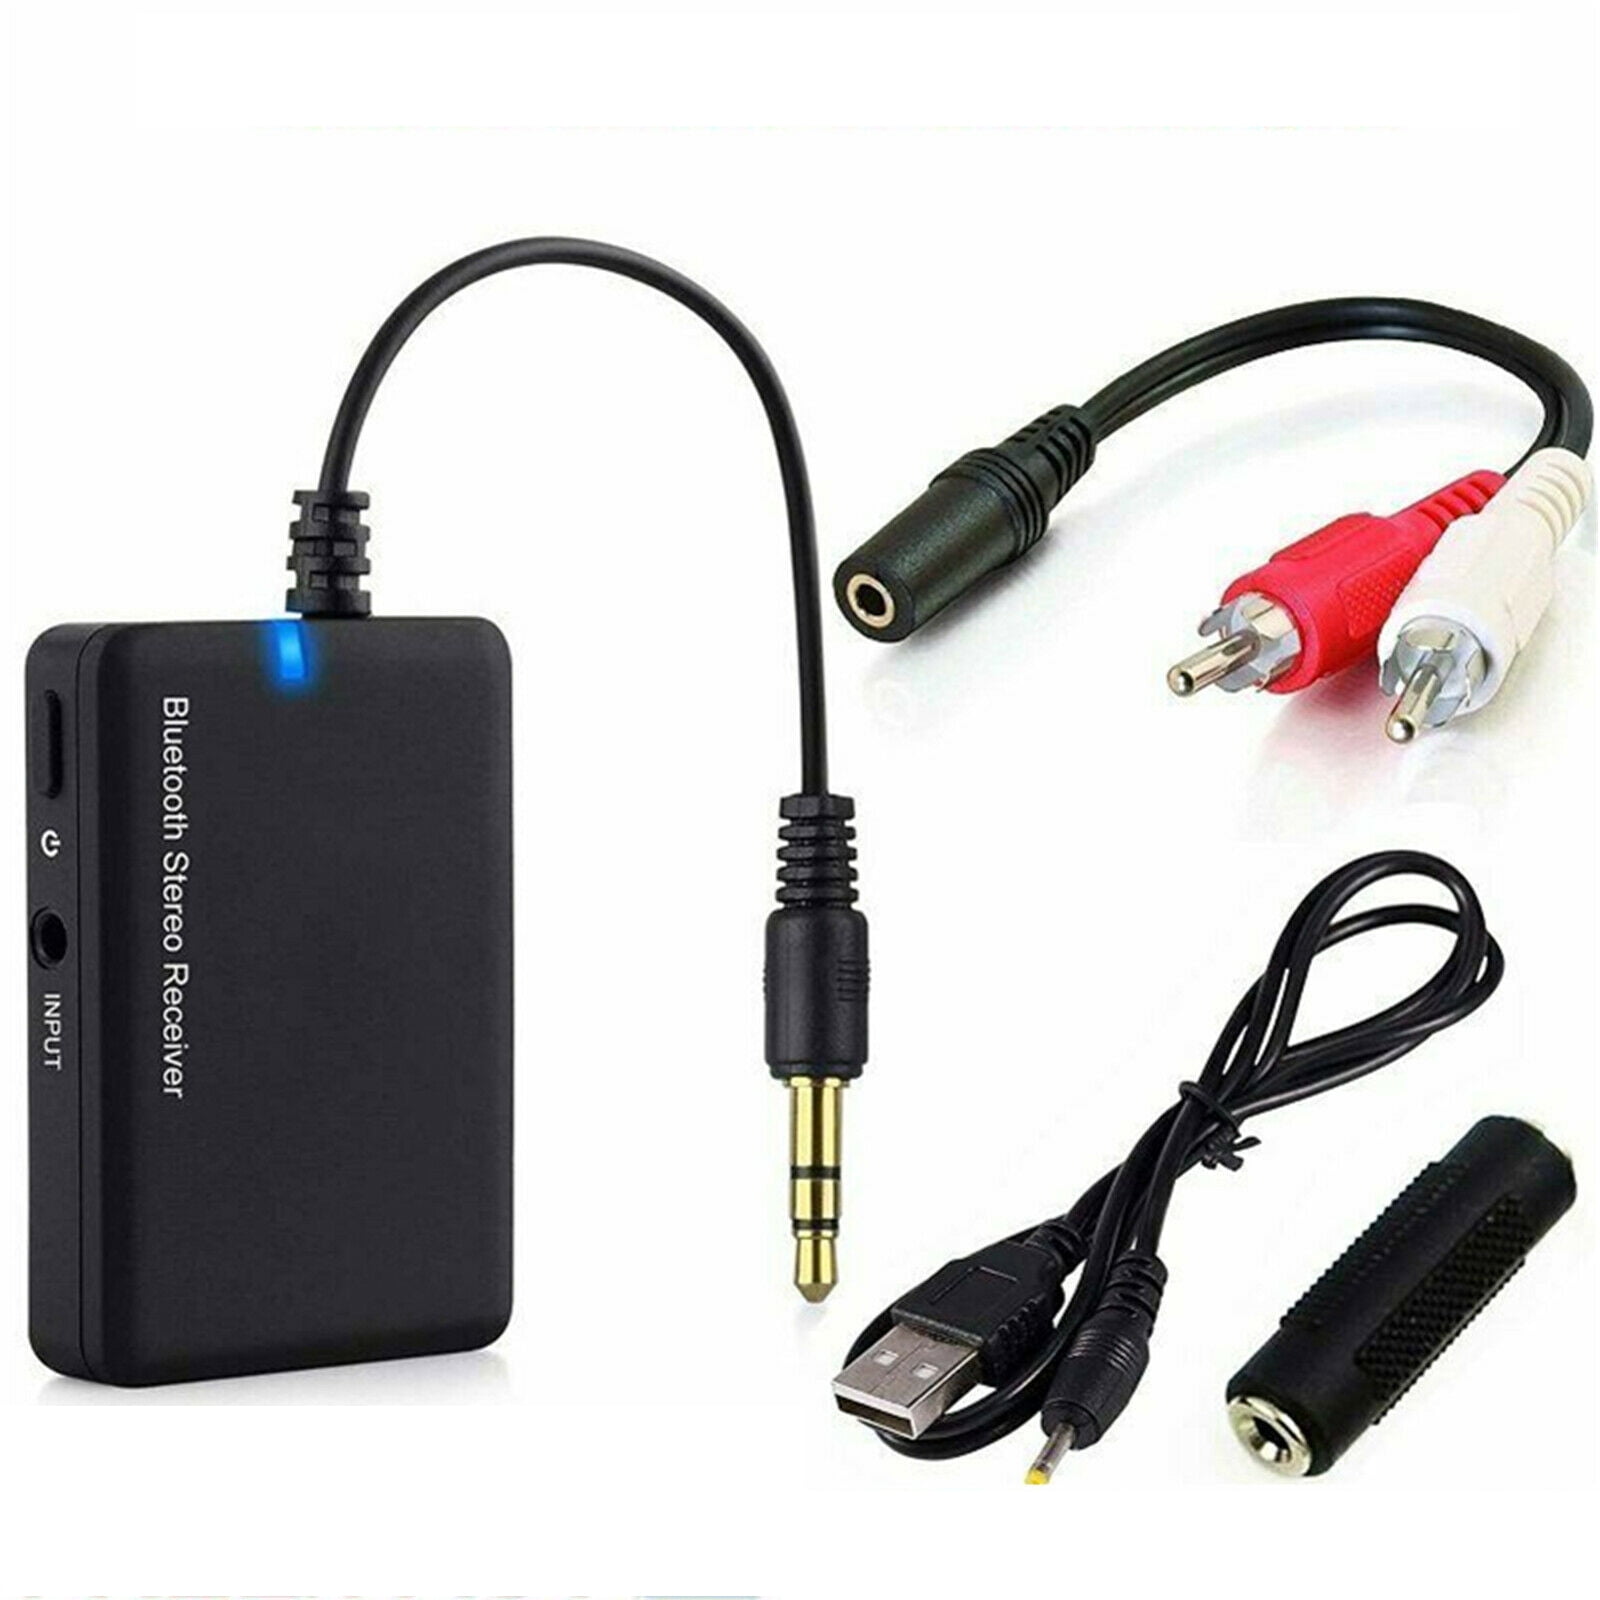 Wireless Bluetooth Audio Transmitter A2DP 3.5mm Stereo Music HiFi Adapter Dongle 